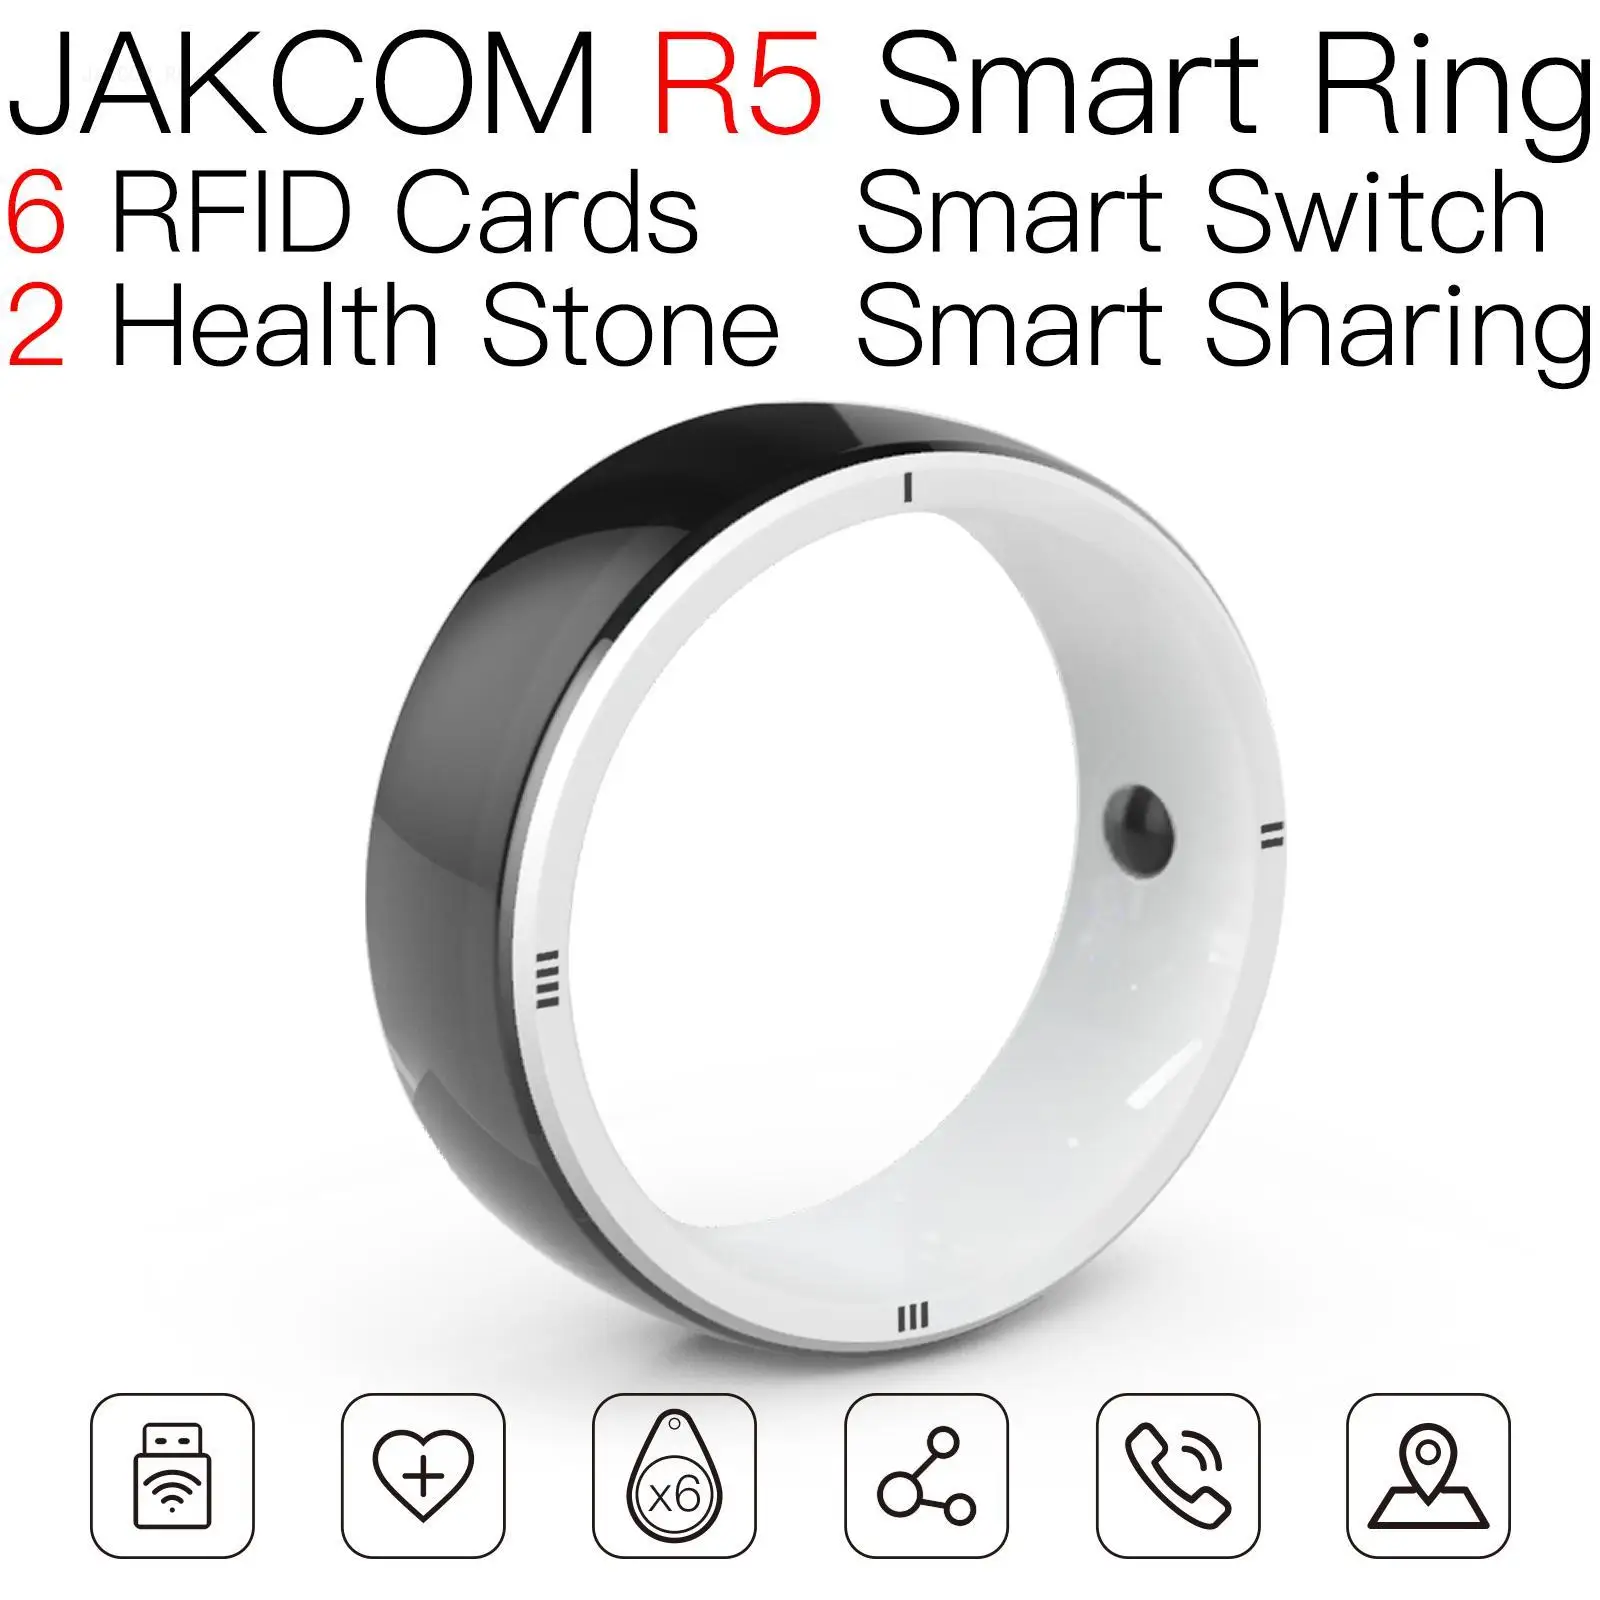 

JAKCOM R5 Smart Ring New arrival as iso 14443a antena system rfid tags 125khz rewritable em 4305 microchip emv chip reader